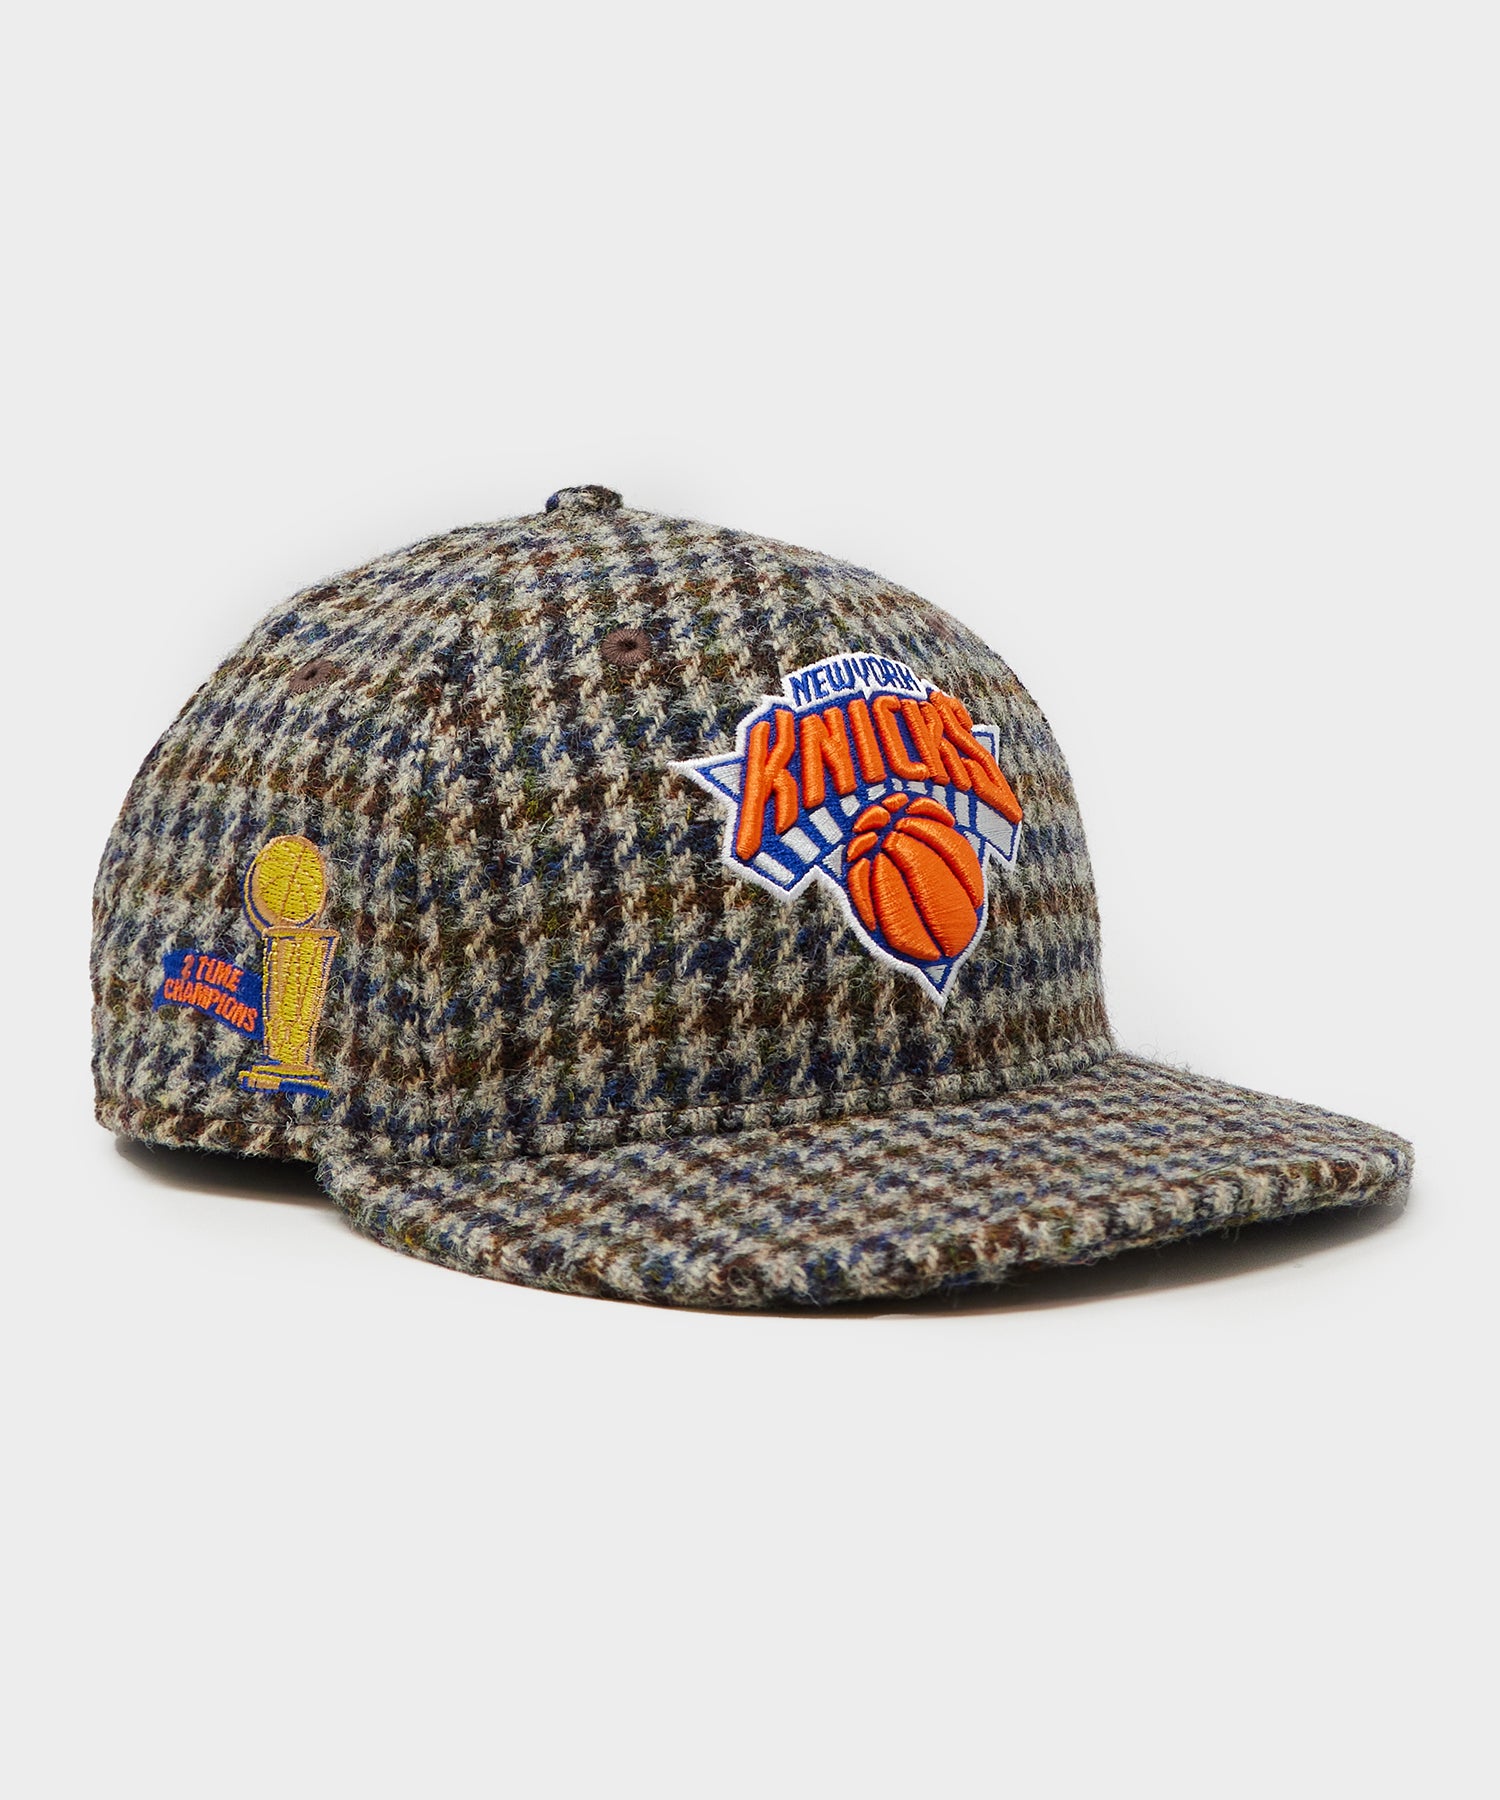 New York Knicks Hat Cap Mens Black / Orange New Era Hat Adjustable